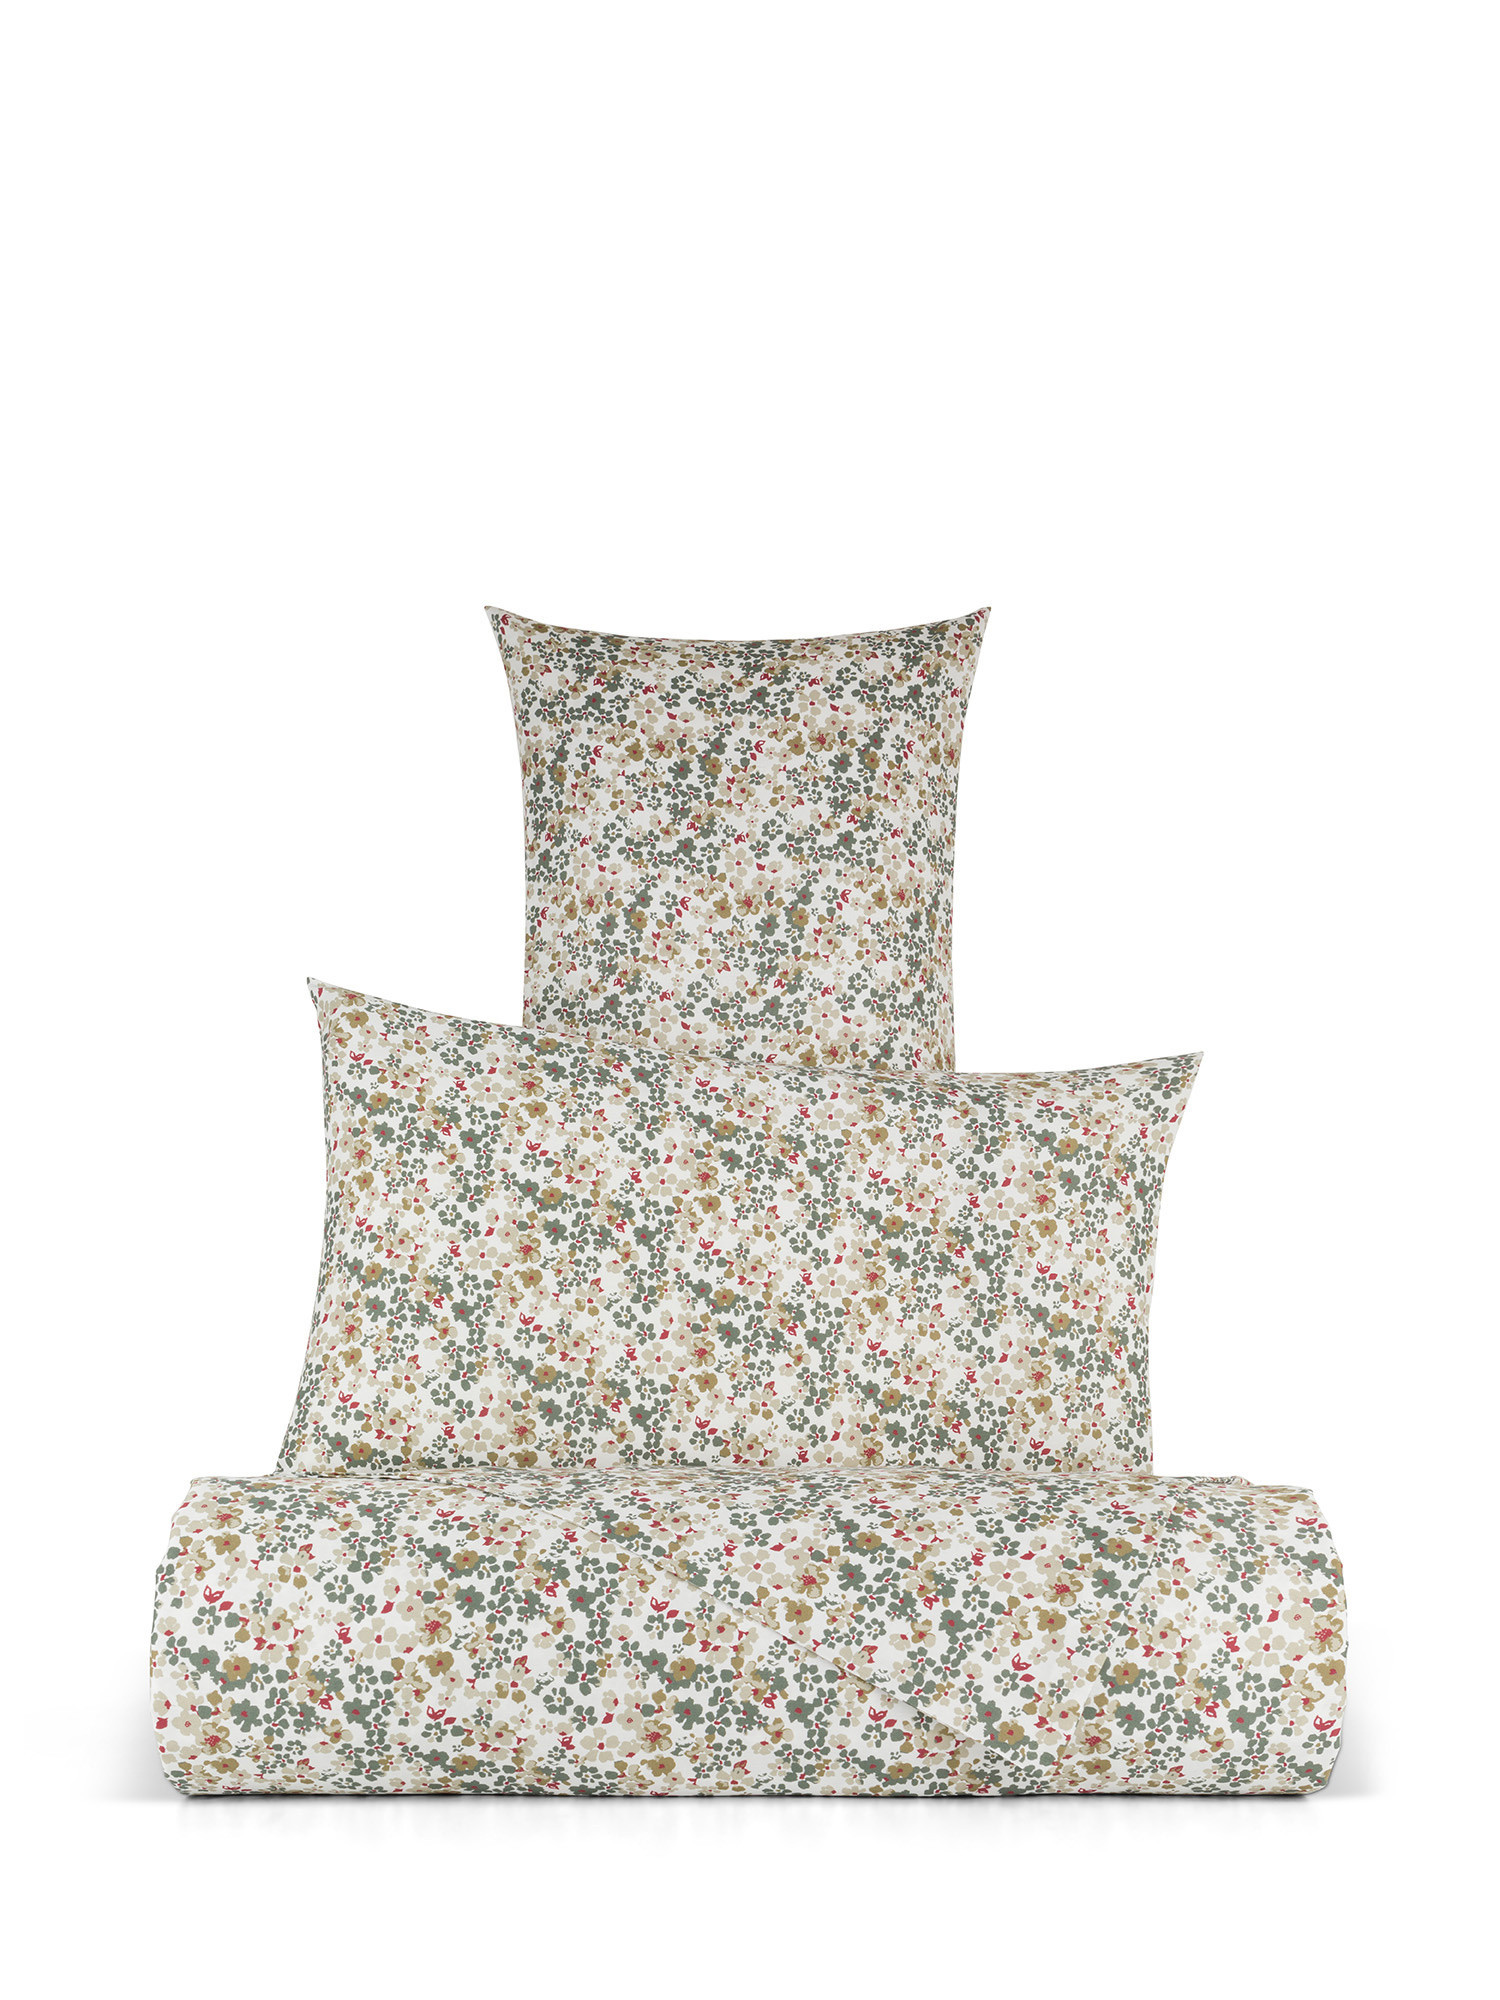 Floral patterned cotton satin duvet cover, Multicolor, large image number 0